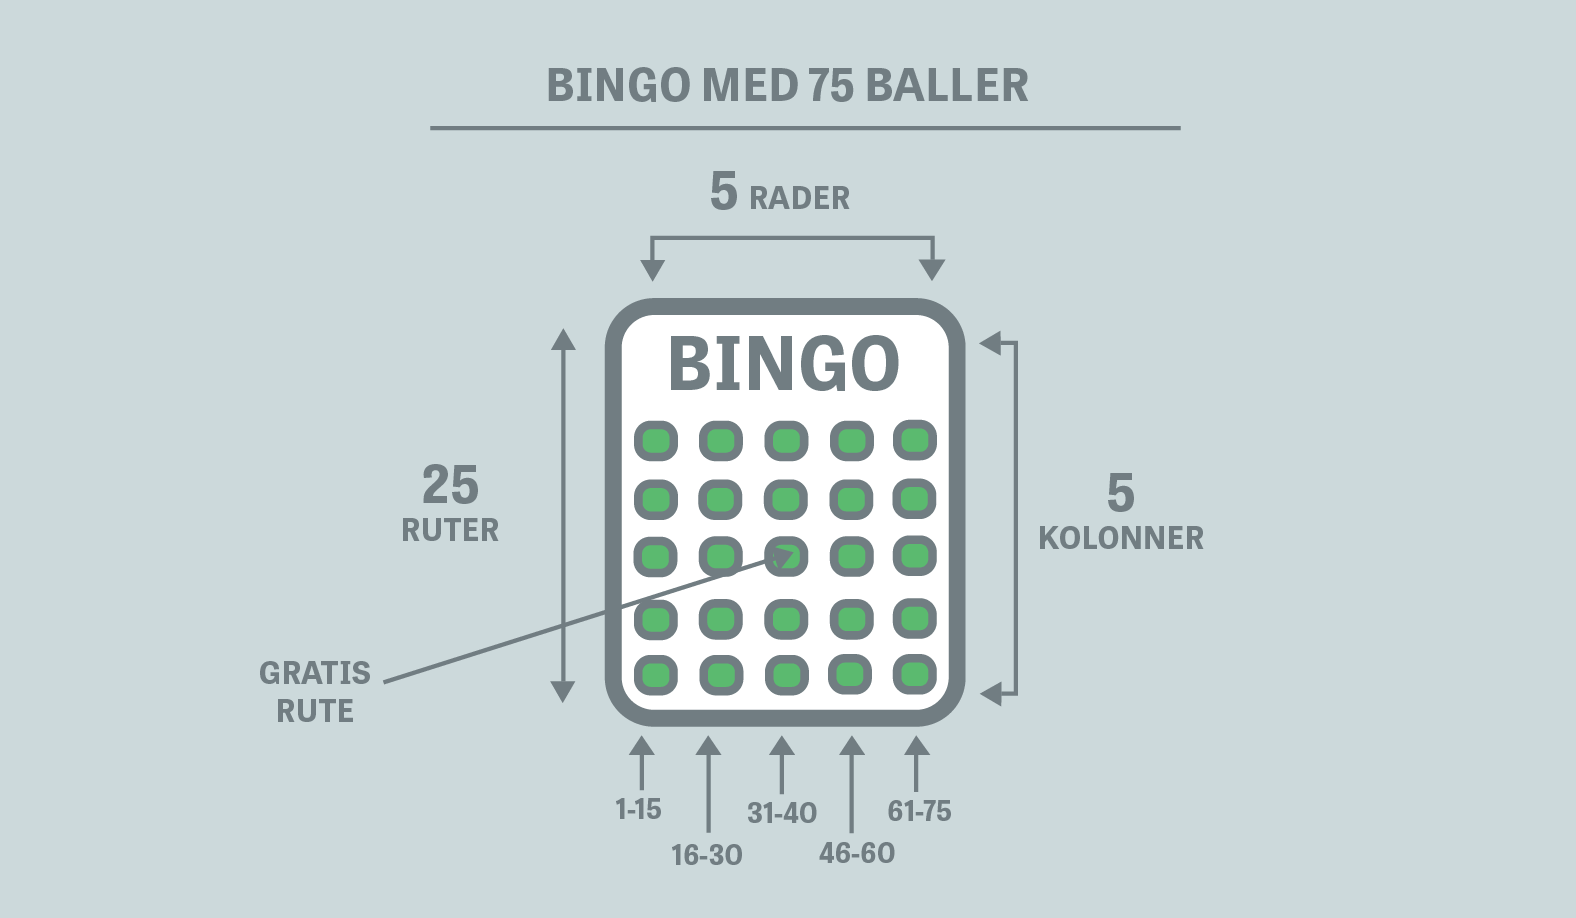 75 baller bingo